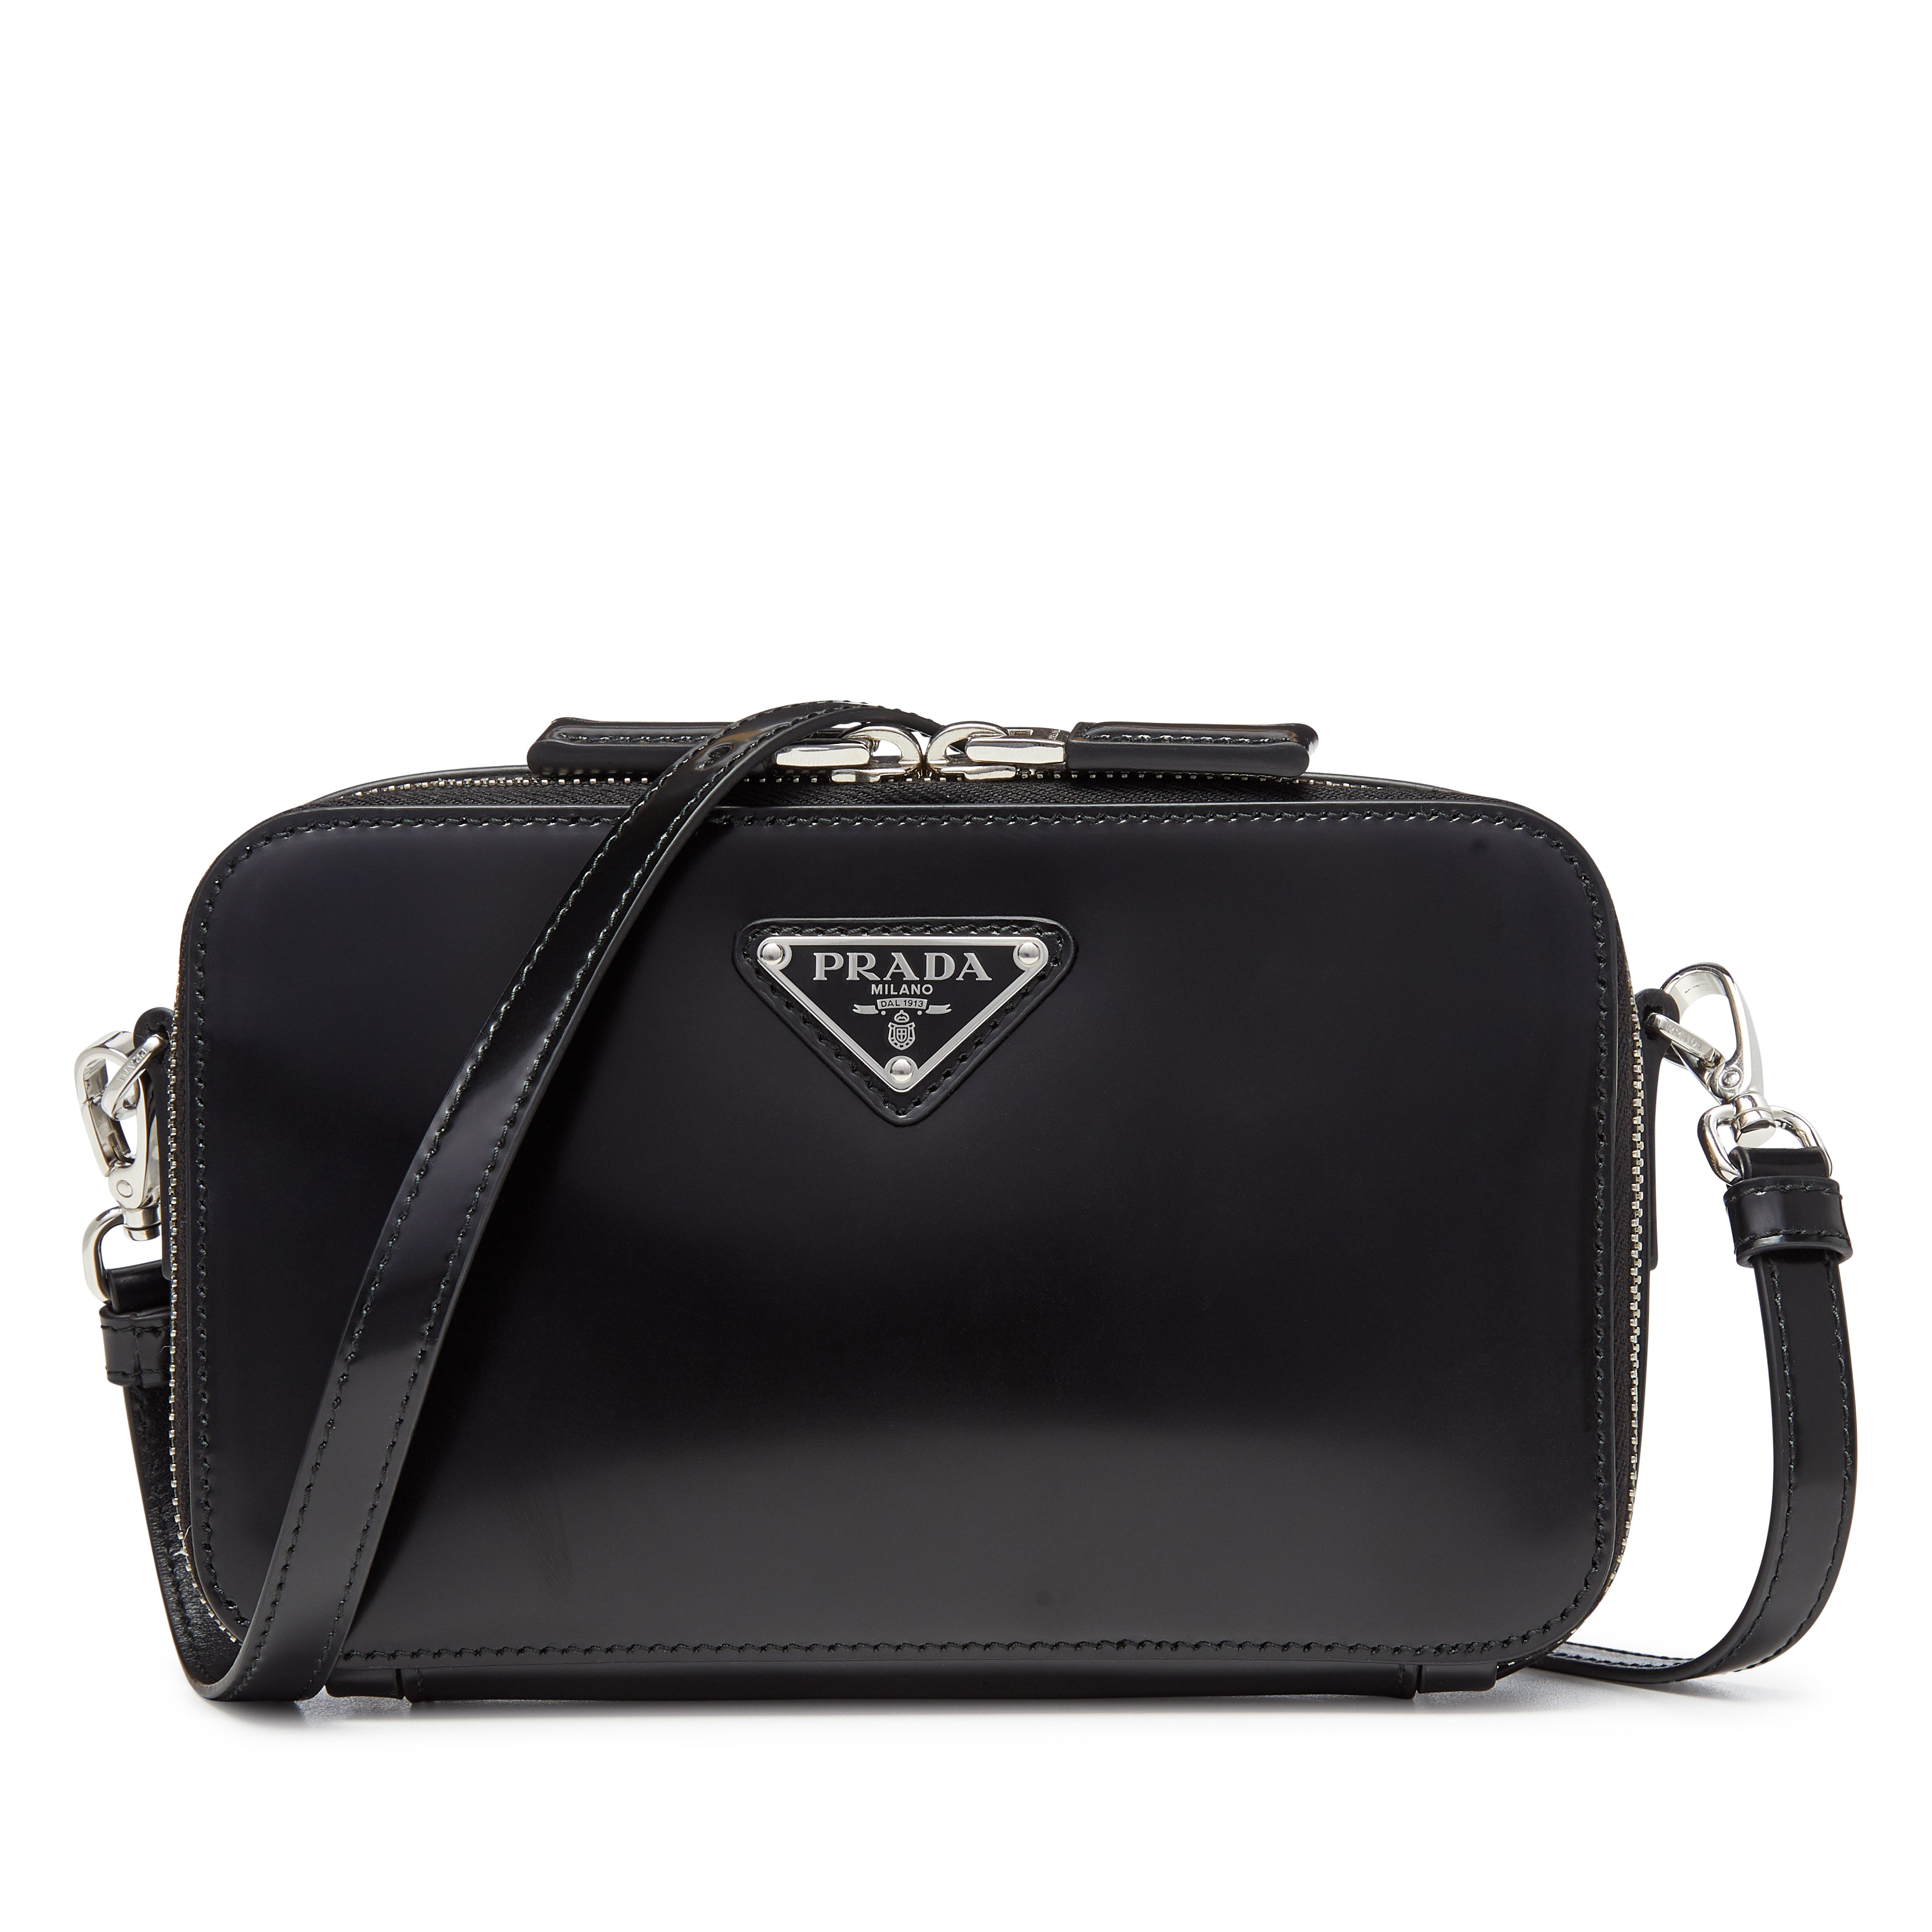 DESIGNER - PRADA Milano -Jacquard Logo Handbag -100% Genuine cost over  £1000 new | eBay